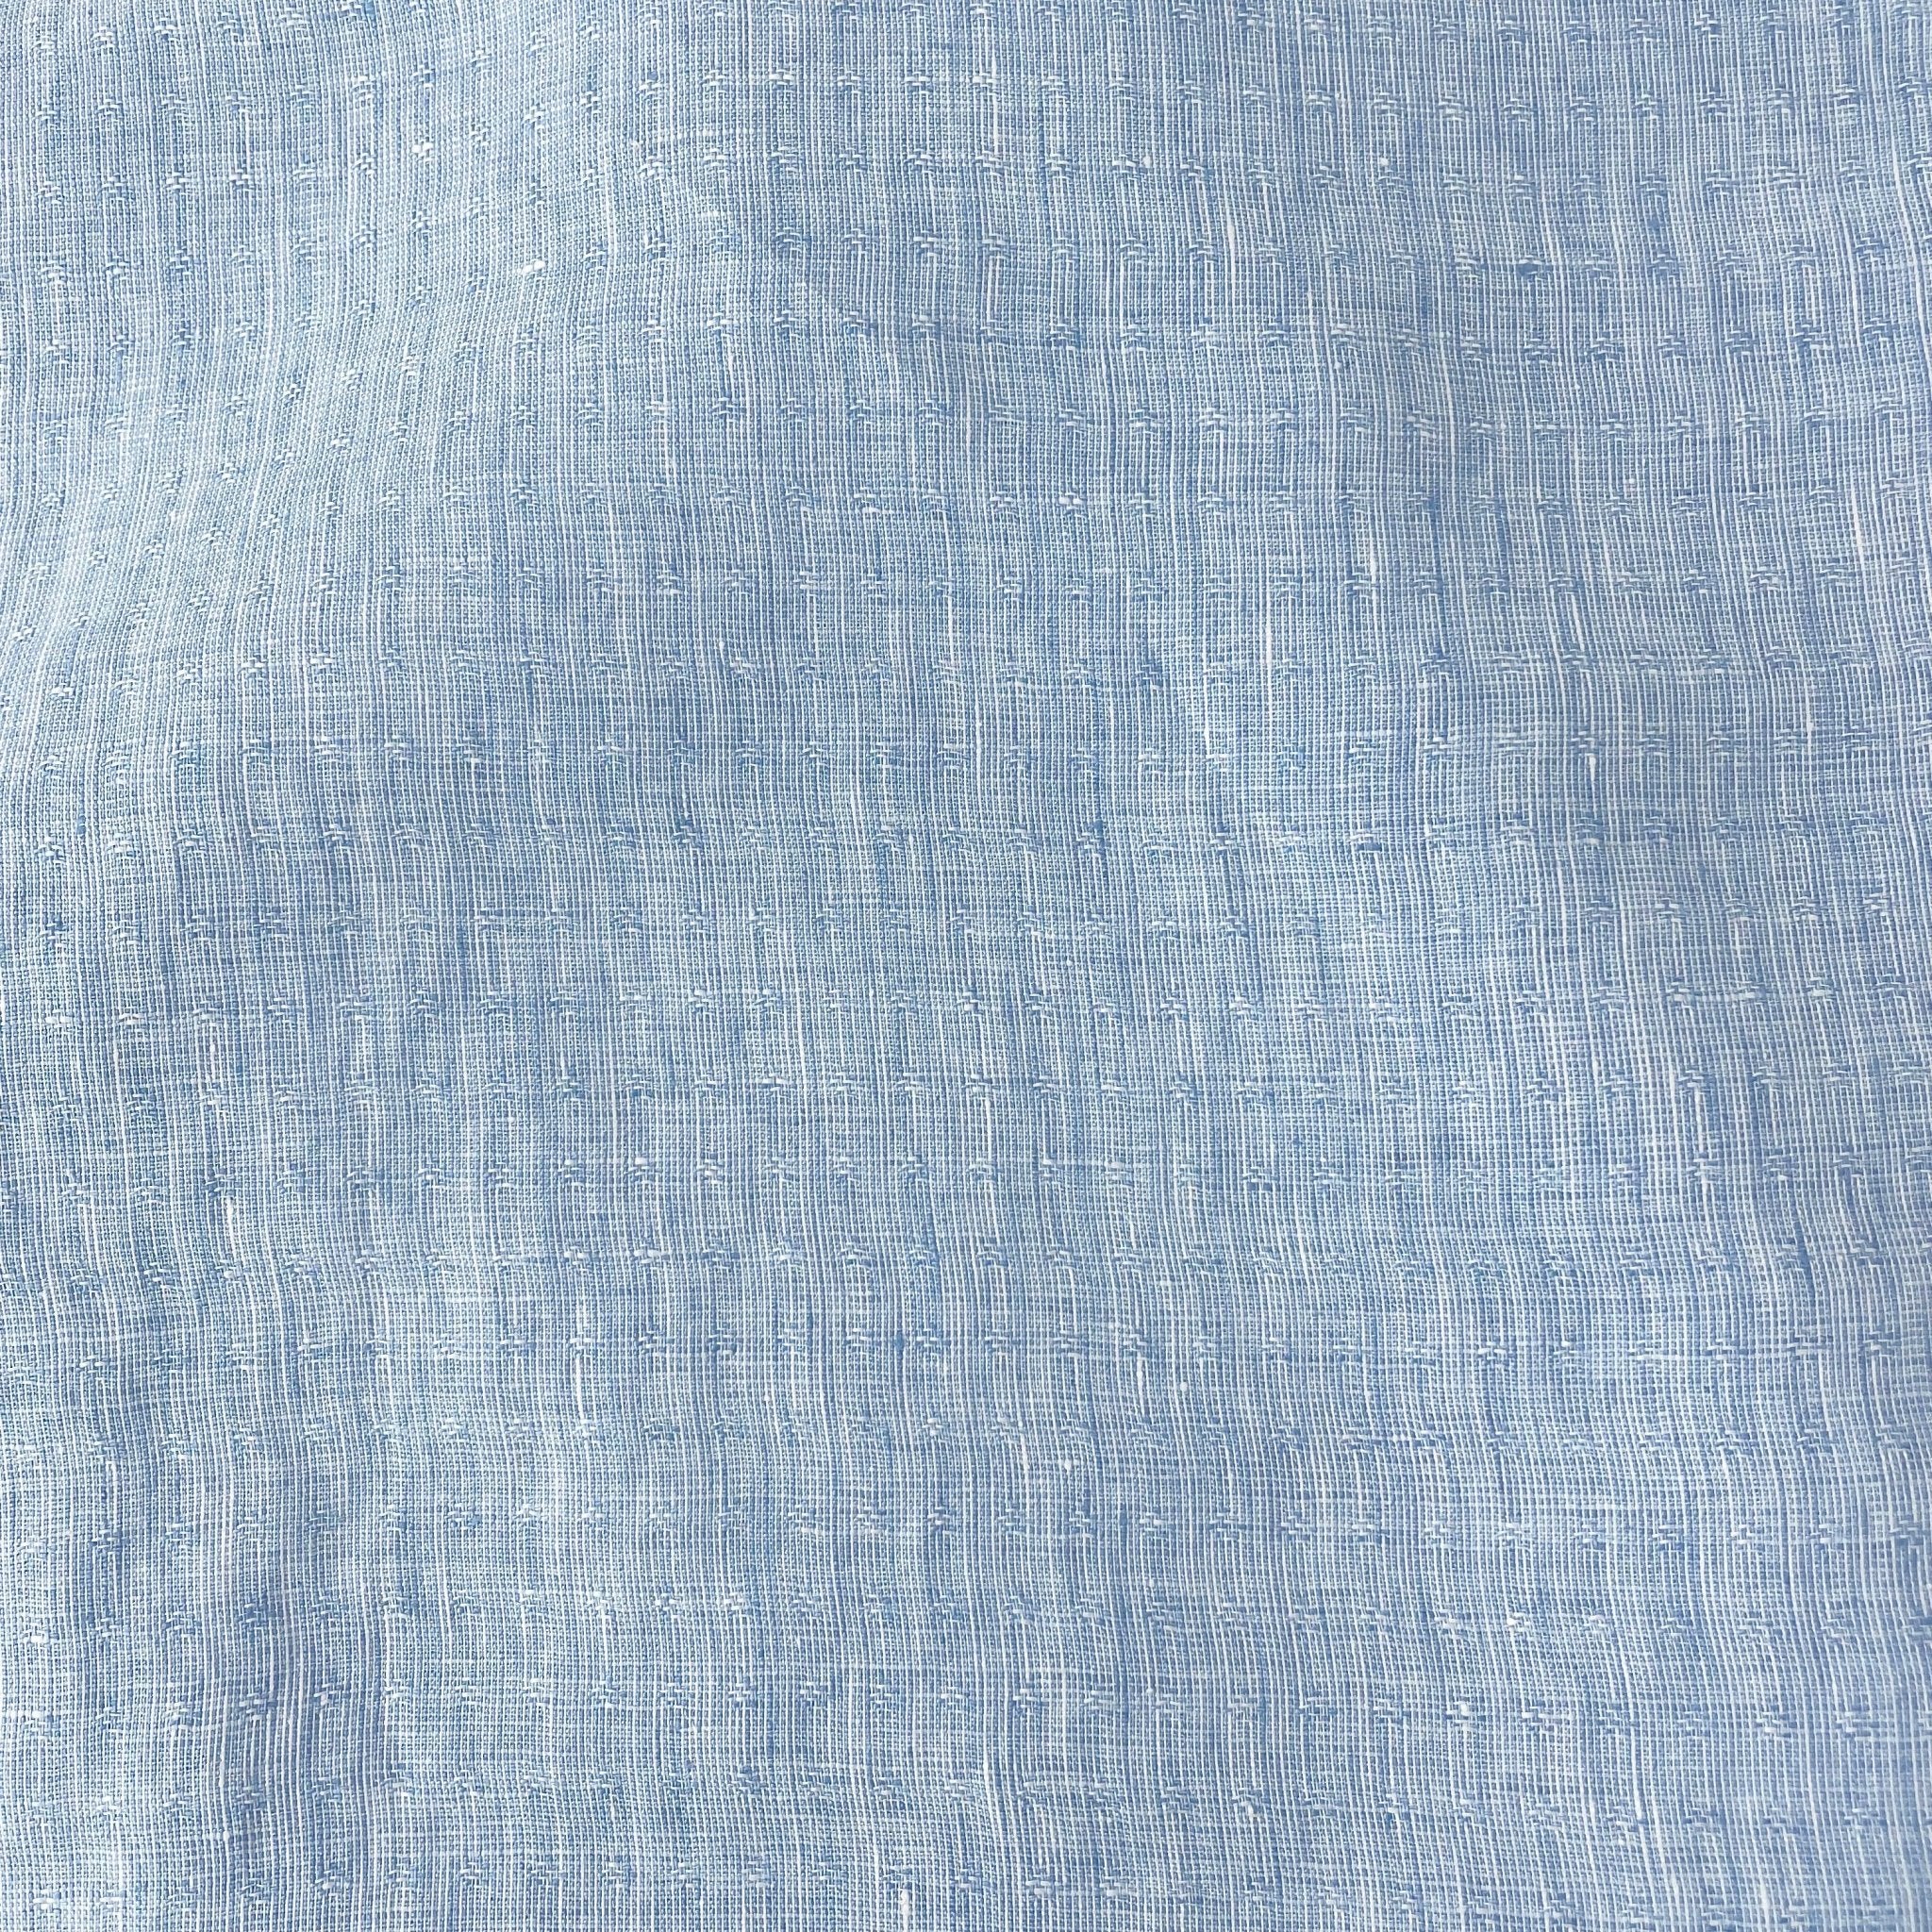 Linen Jacquard Small Pattern Fabric 4888 4887 - The Linen Lab - Blue